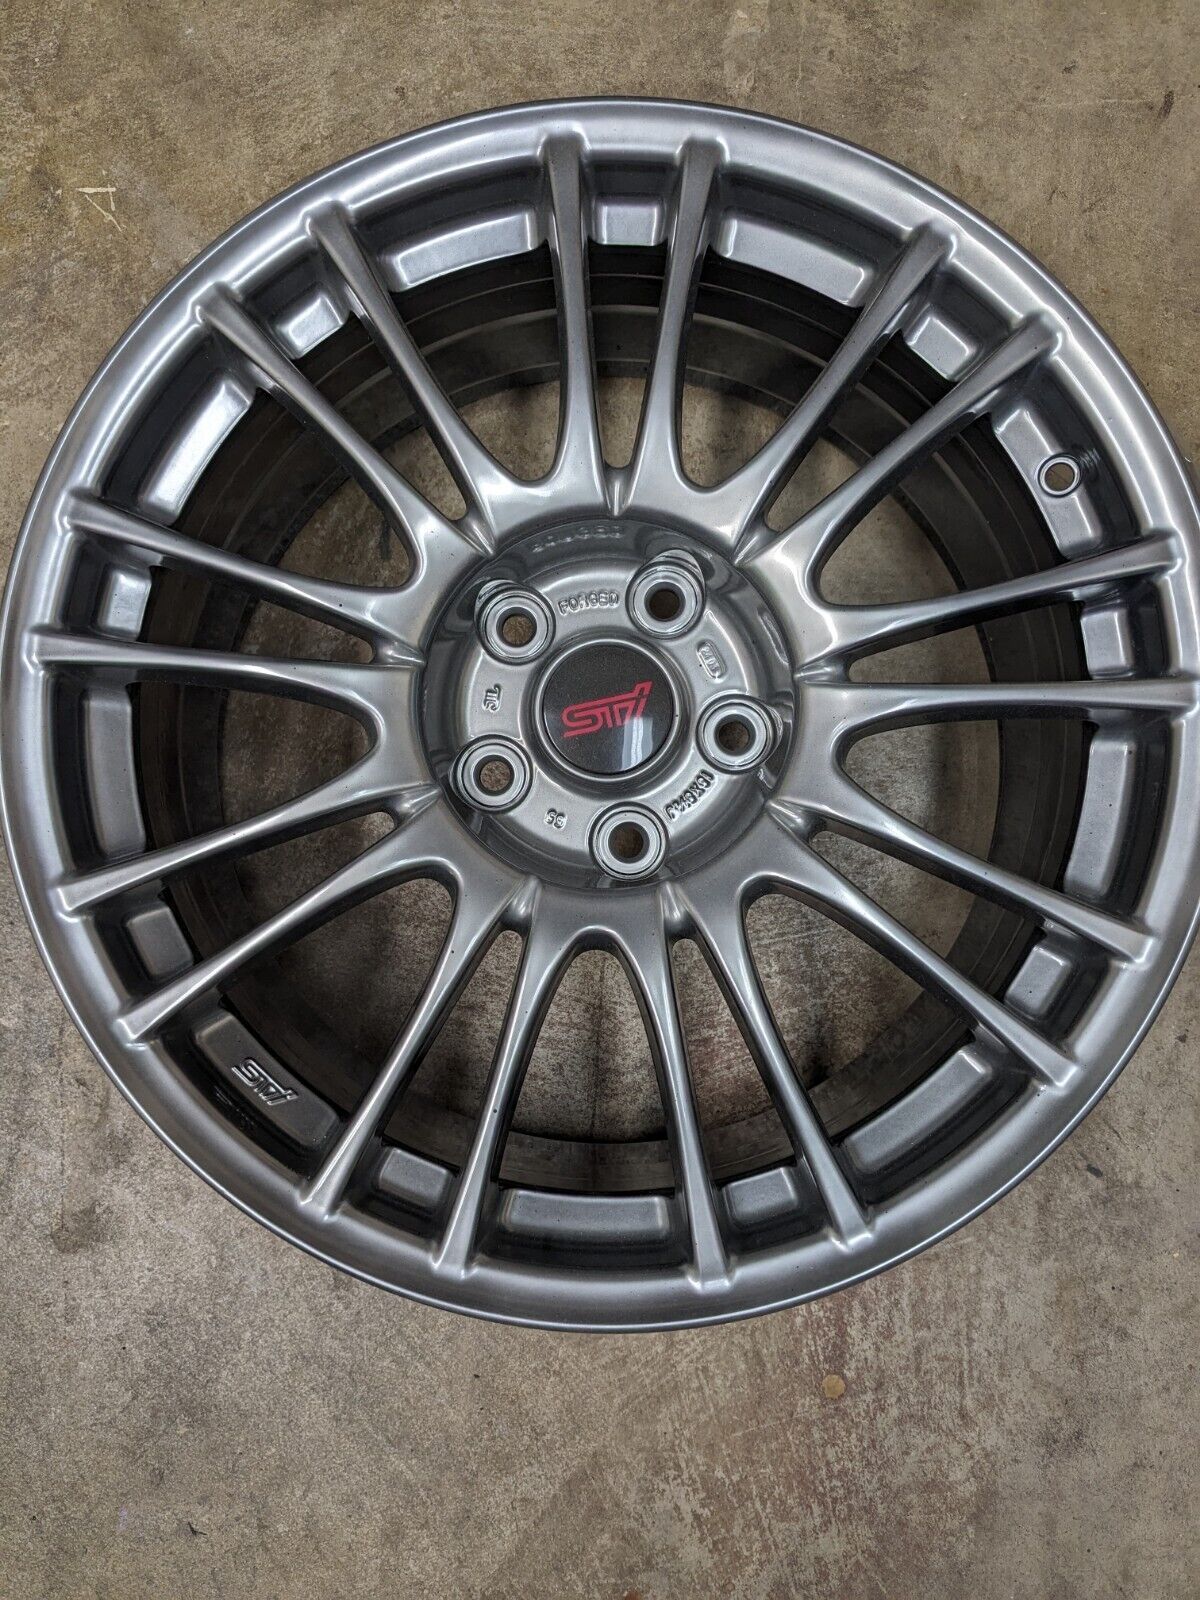 Subaru Impreza WRX STI Forged Aluminum Wheel 18 8.5J +55  No Tires